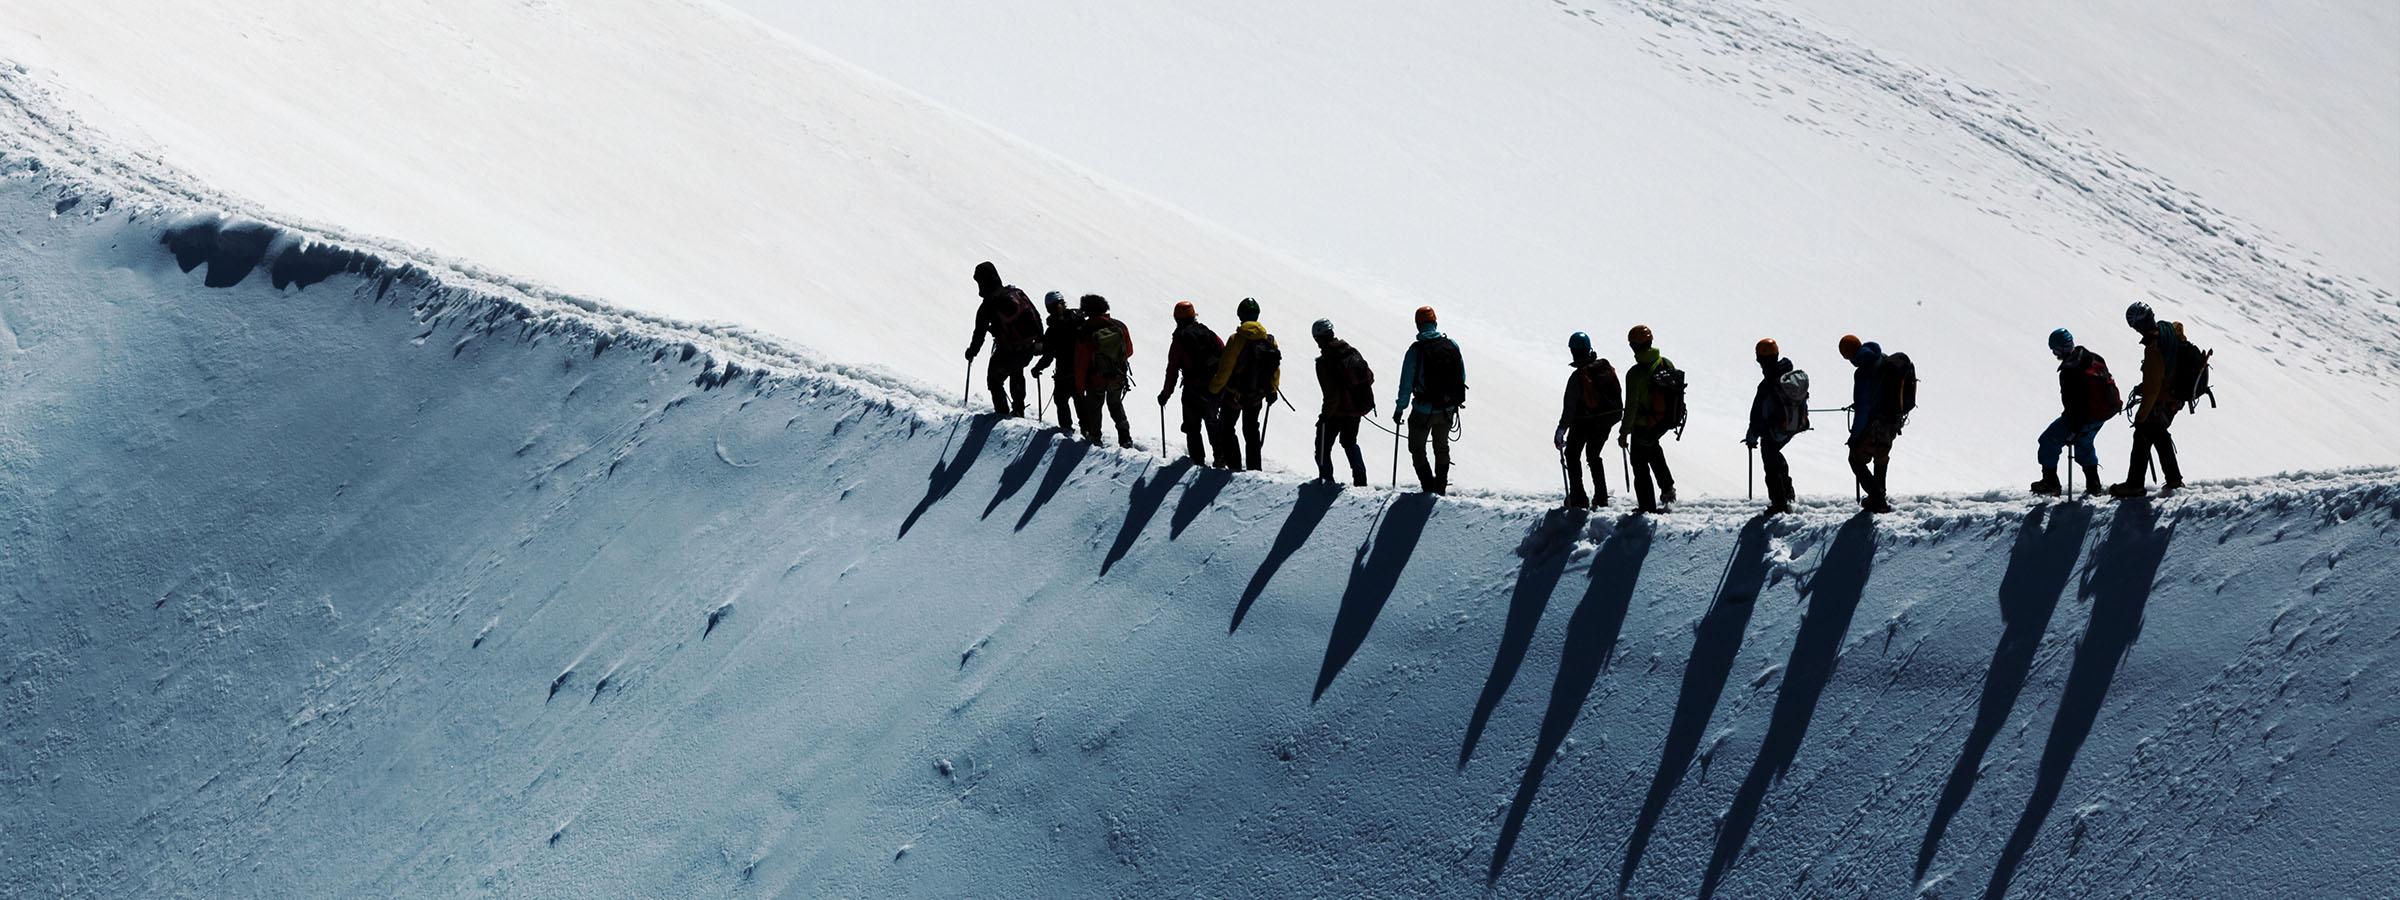 Mountain climbers walking along a snowtop ridge.